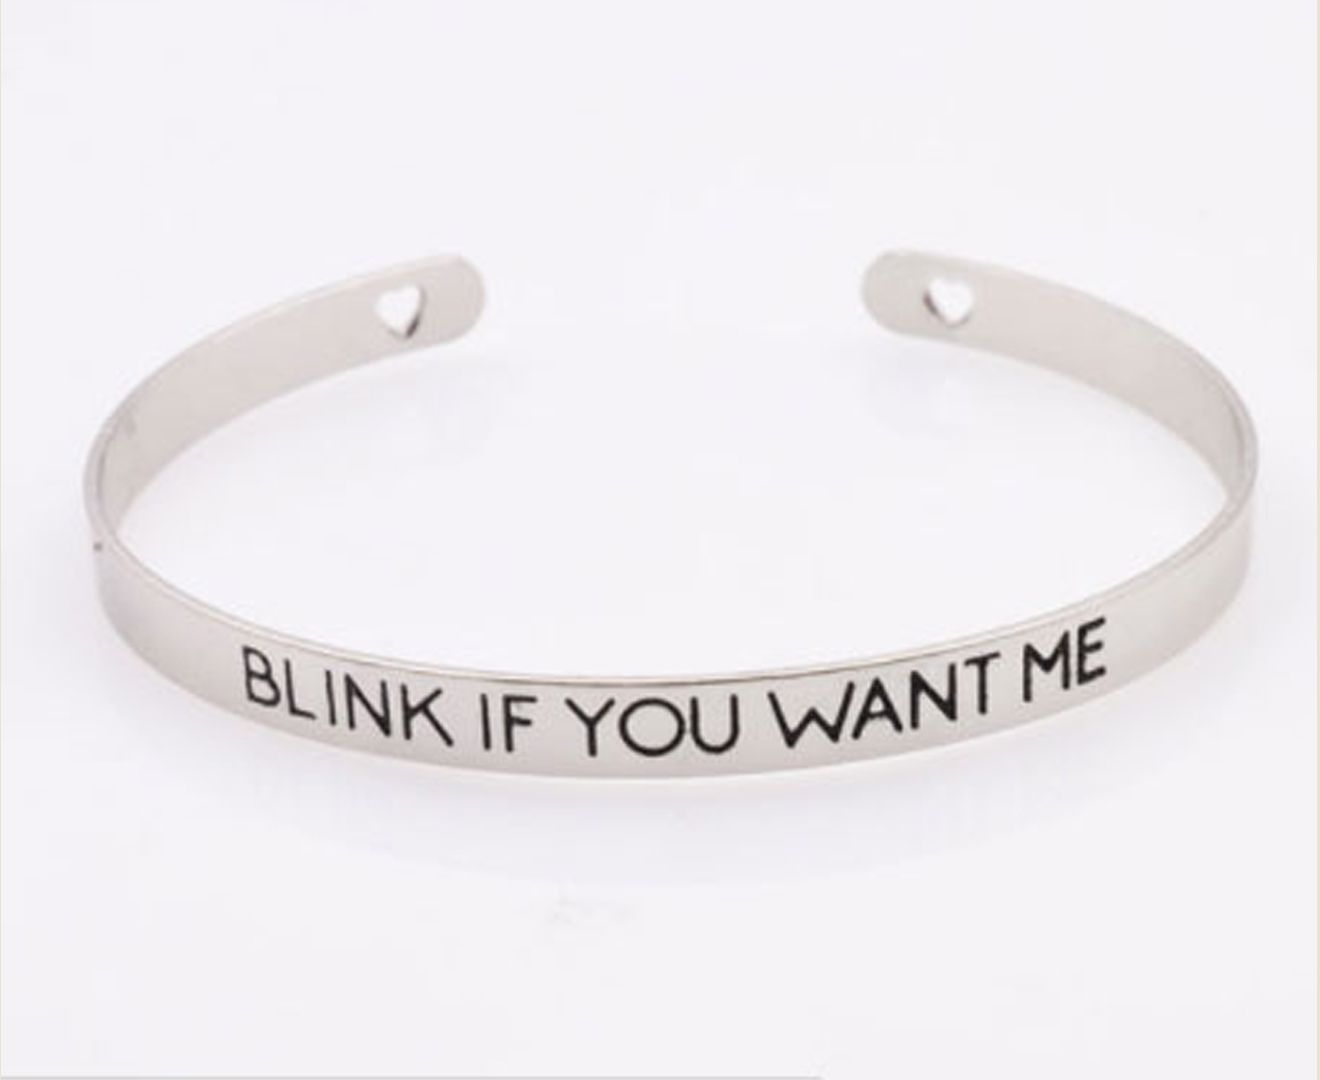 Blink if you want me Bracelet